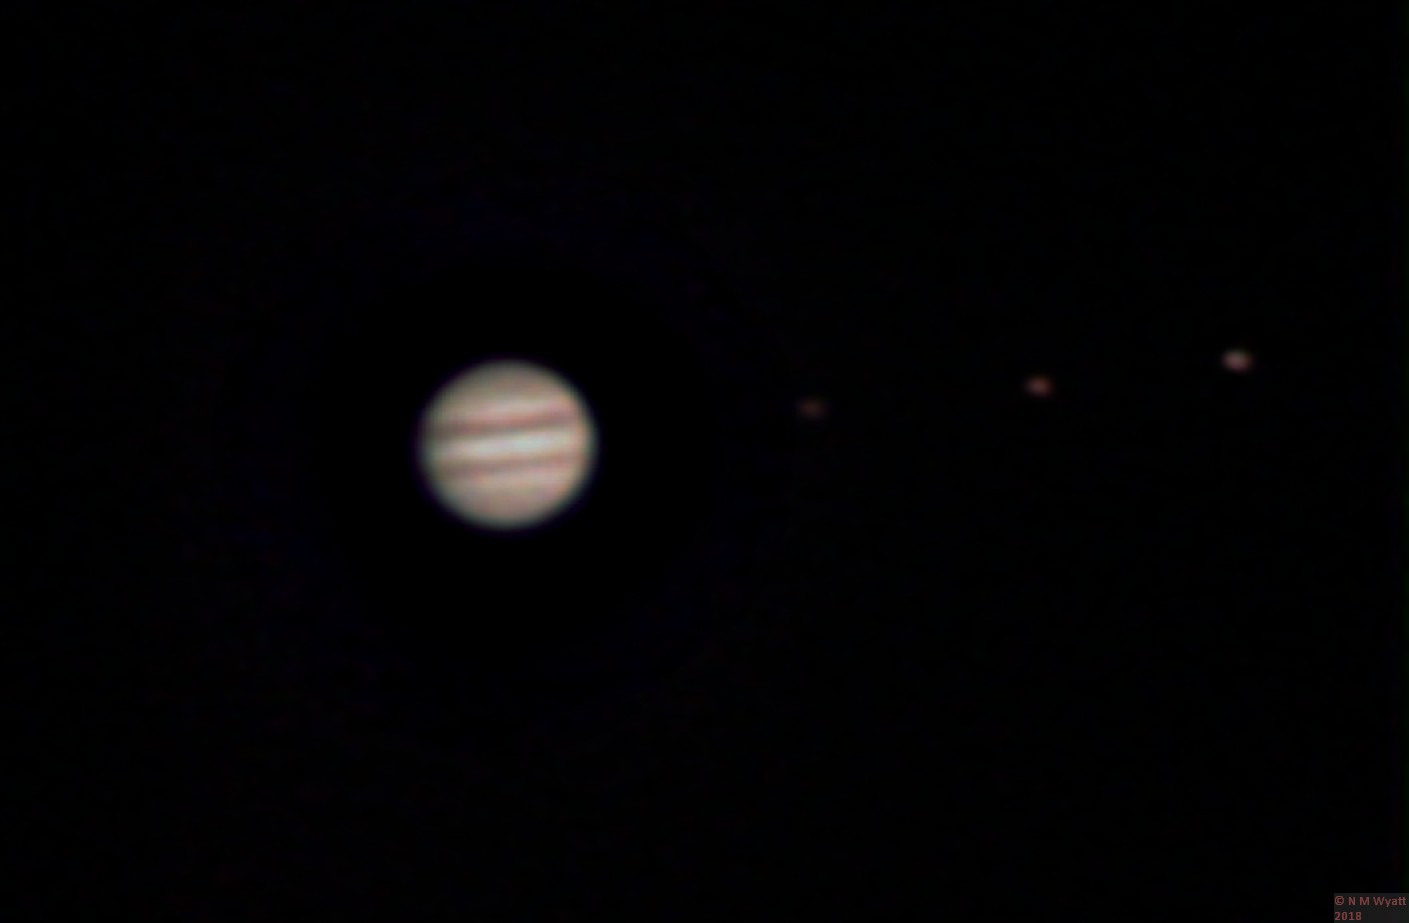 Jupiter and three moons